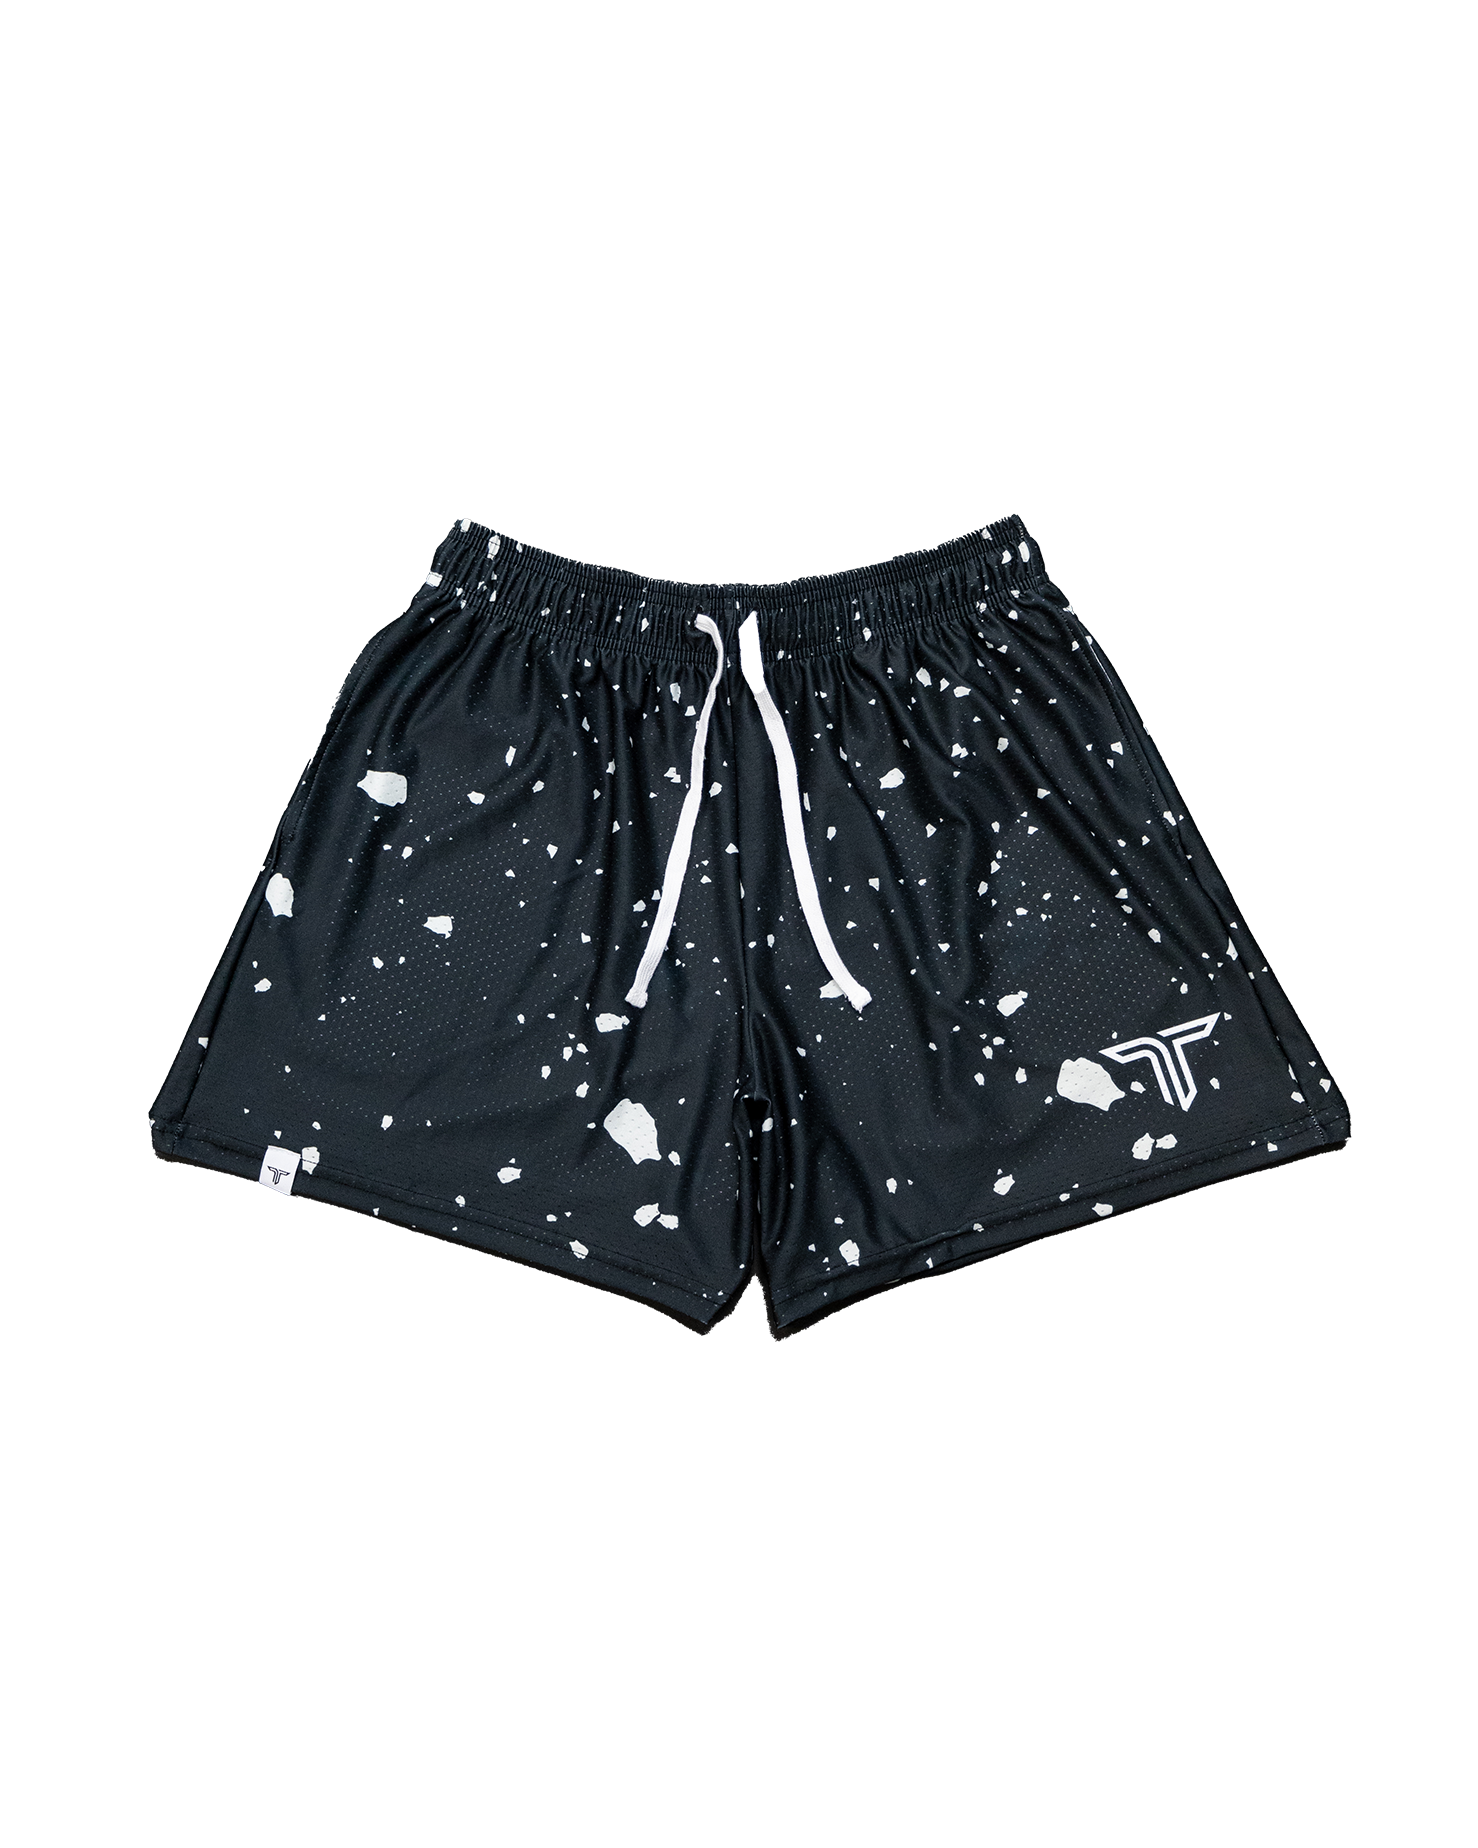 Black Speckle Mesh Rec Shorts